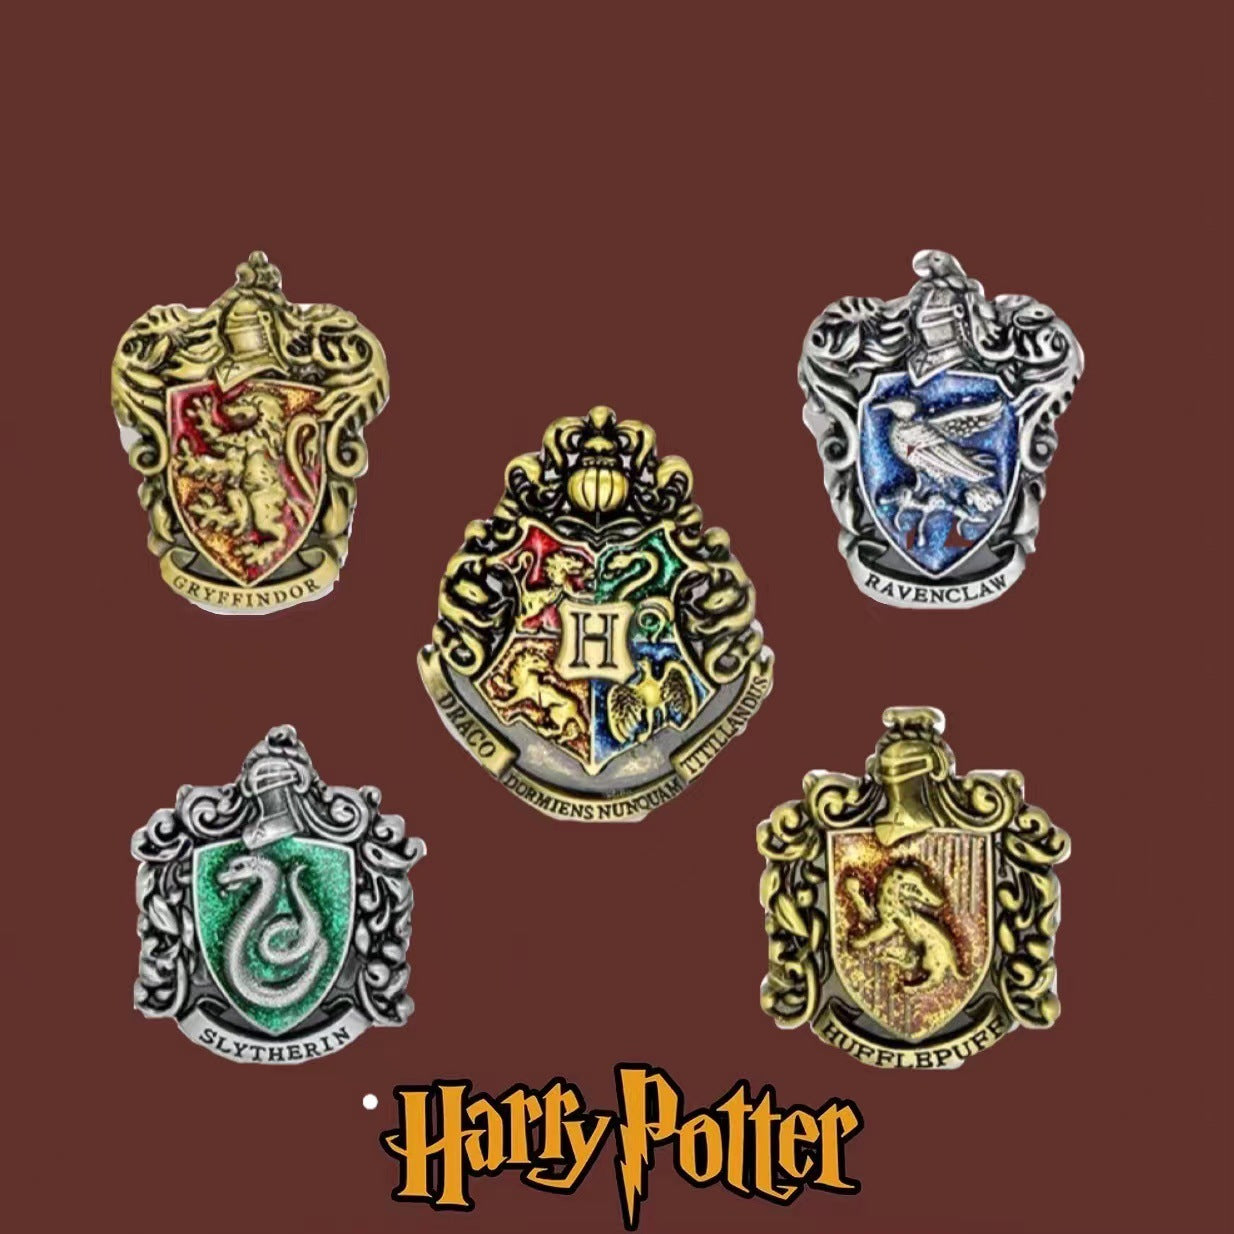 Harry Potter Lapel Pin Harry Potter Accessories Harry potter Fashion - Harry  Potter Jewelry Harry Potter Gift 